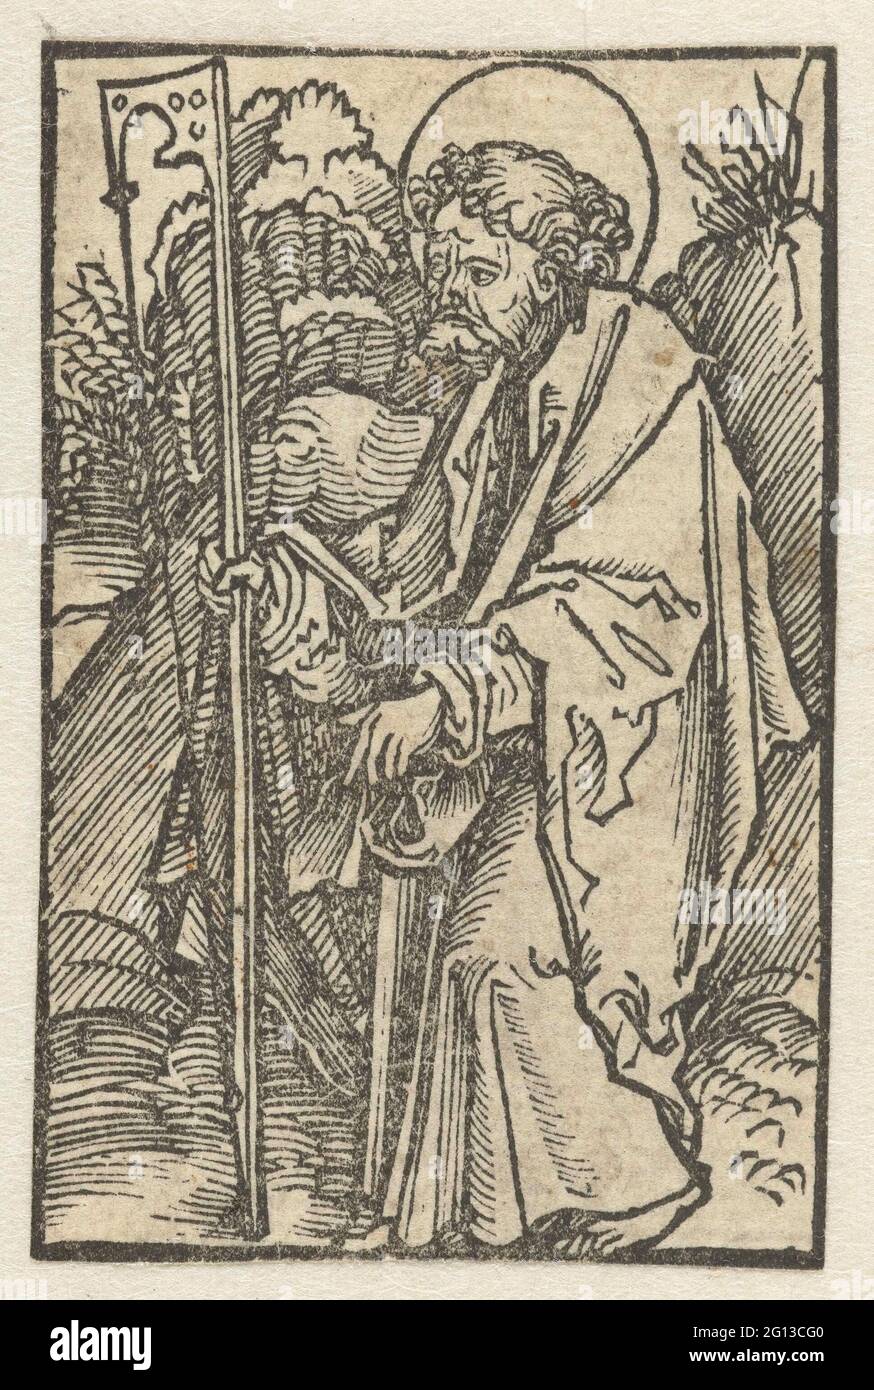 Apostle James De Minerere. The apostle James De Meere with a hatmaking arch (?). Stock Photo